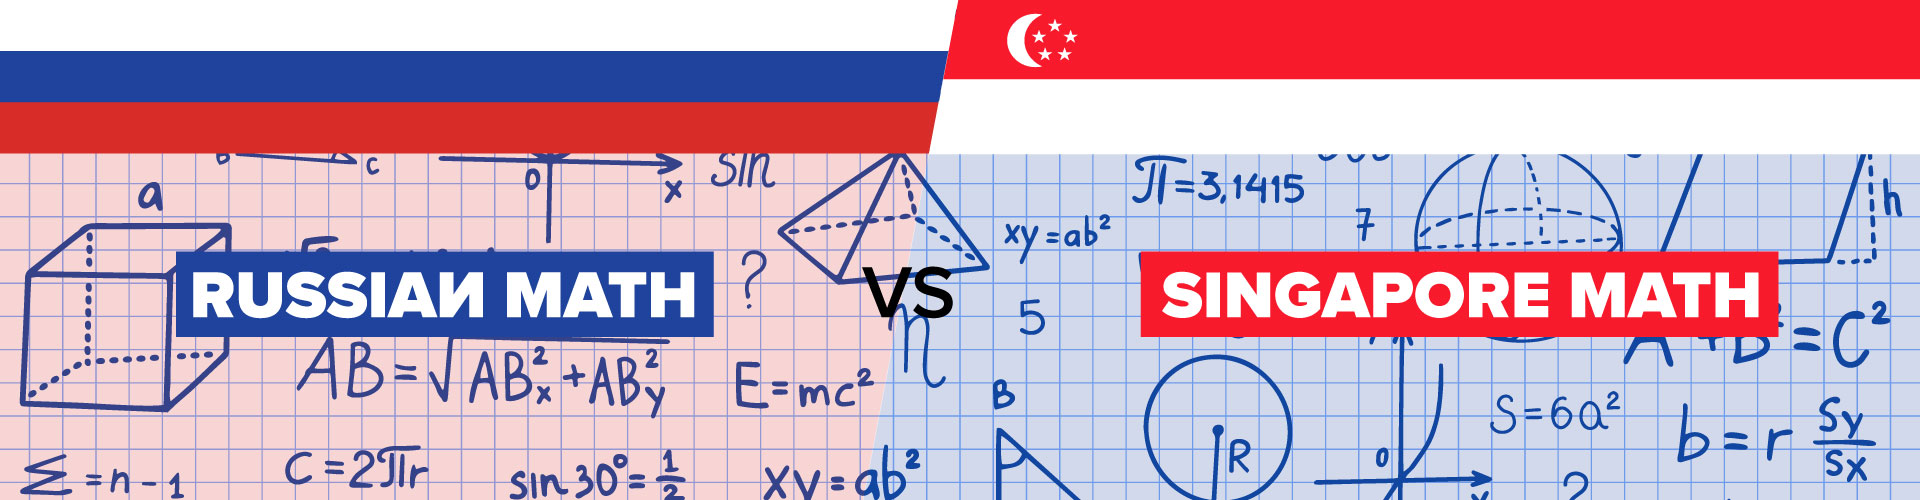 singapore-vs-russian-math